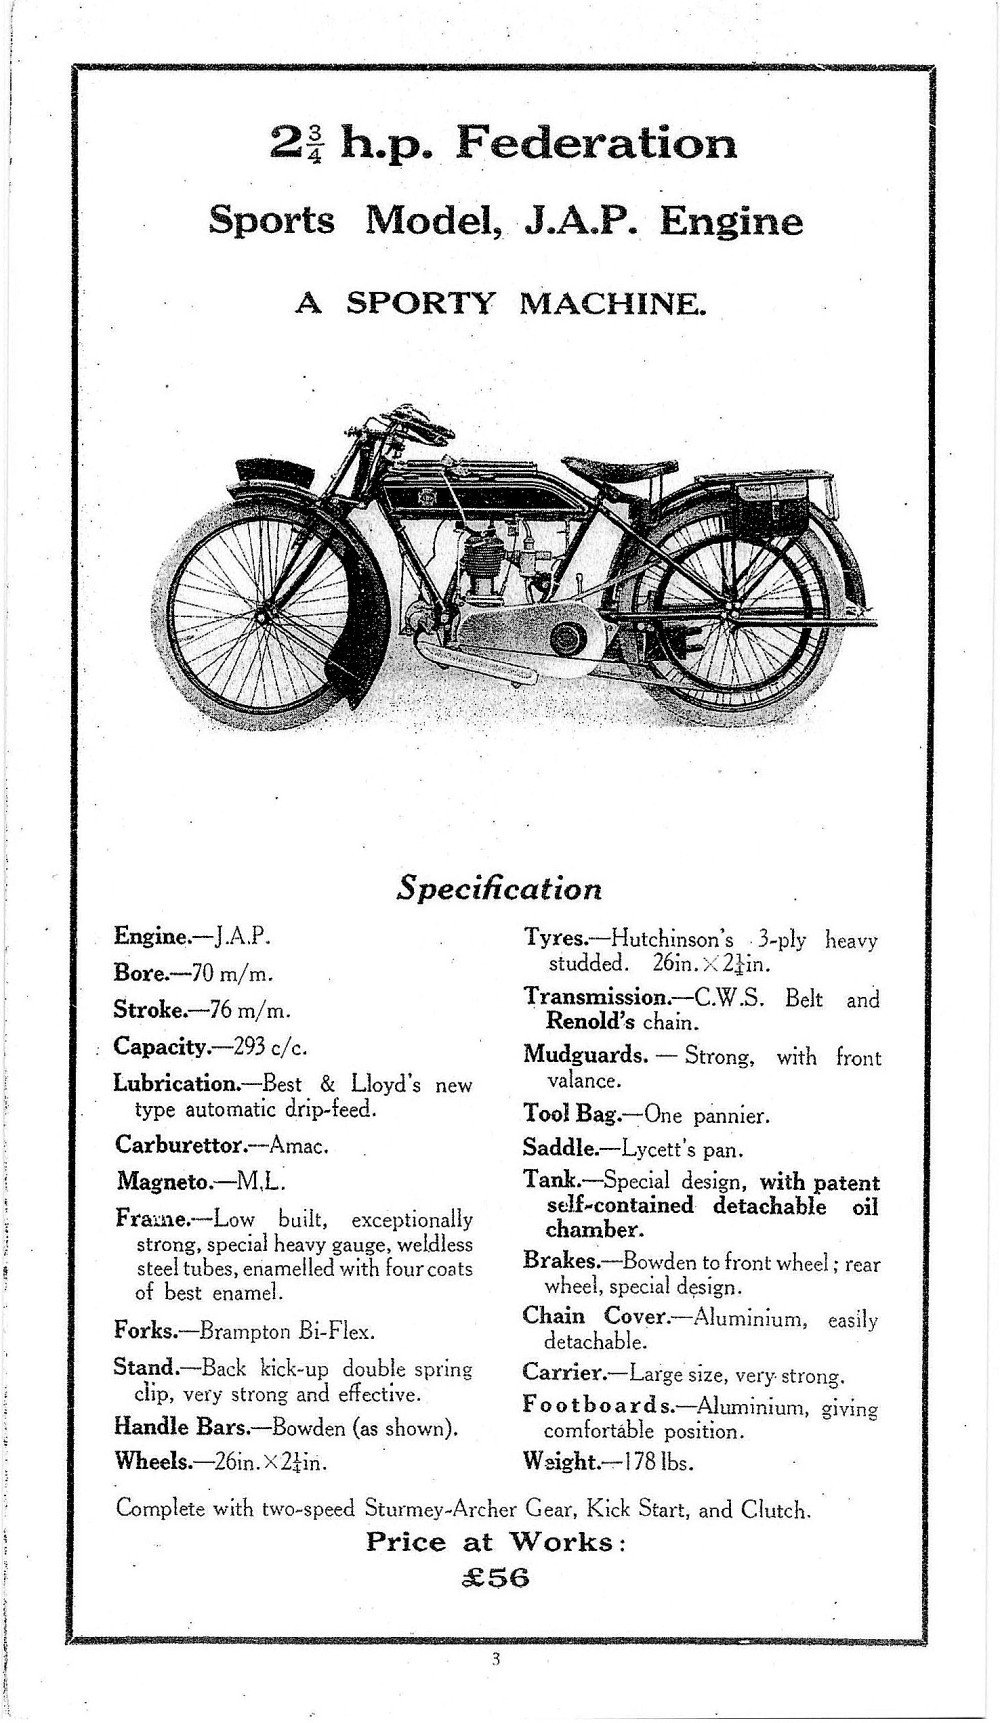 CWS Brochure 1923 3